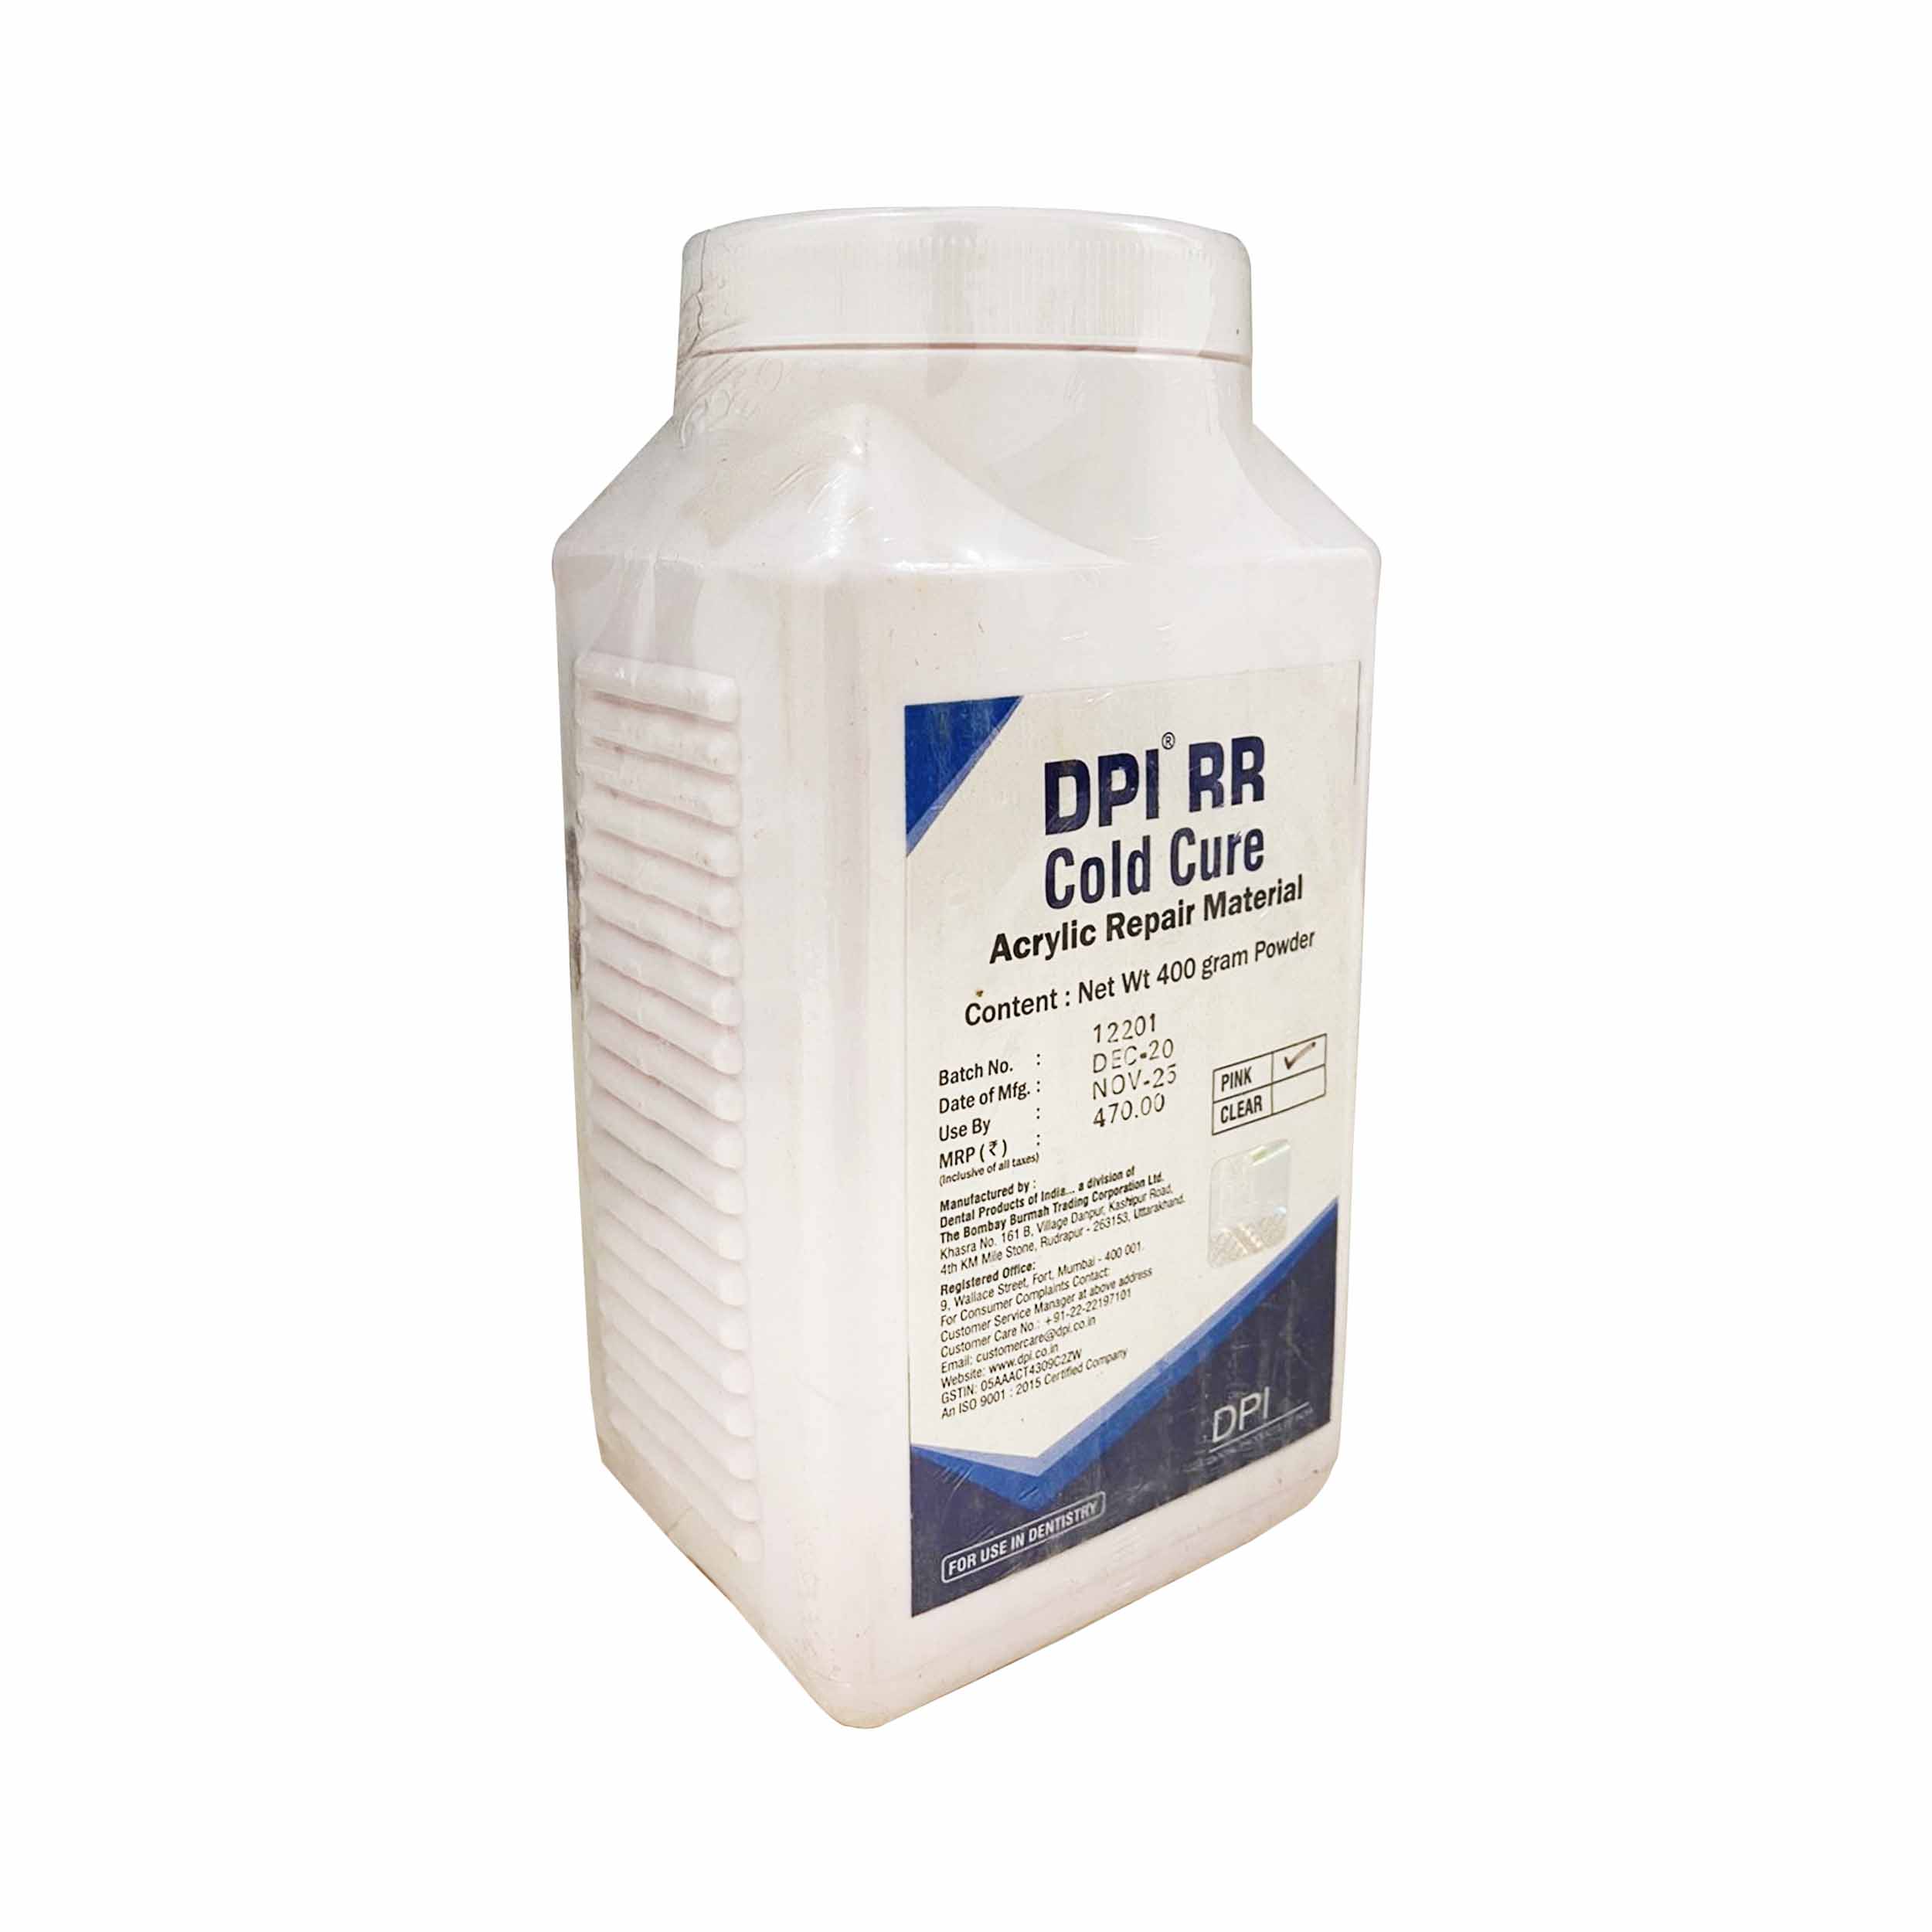 DPI RR Cold Cure Powder 400gm